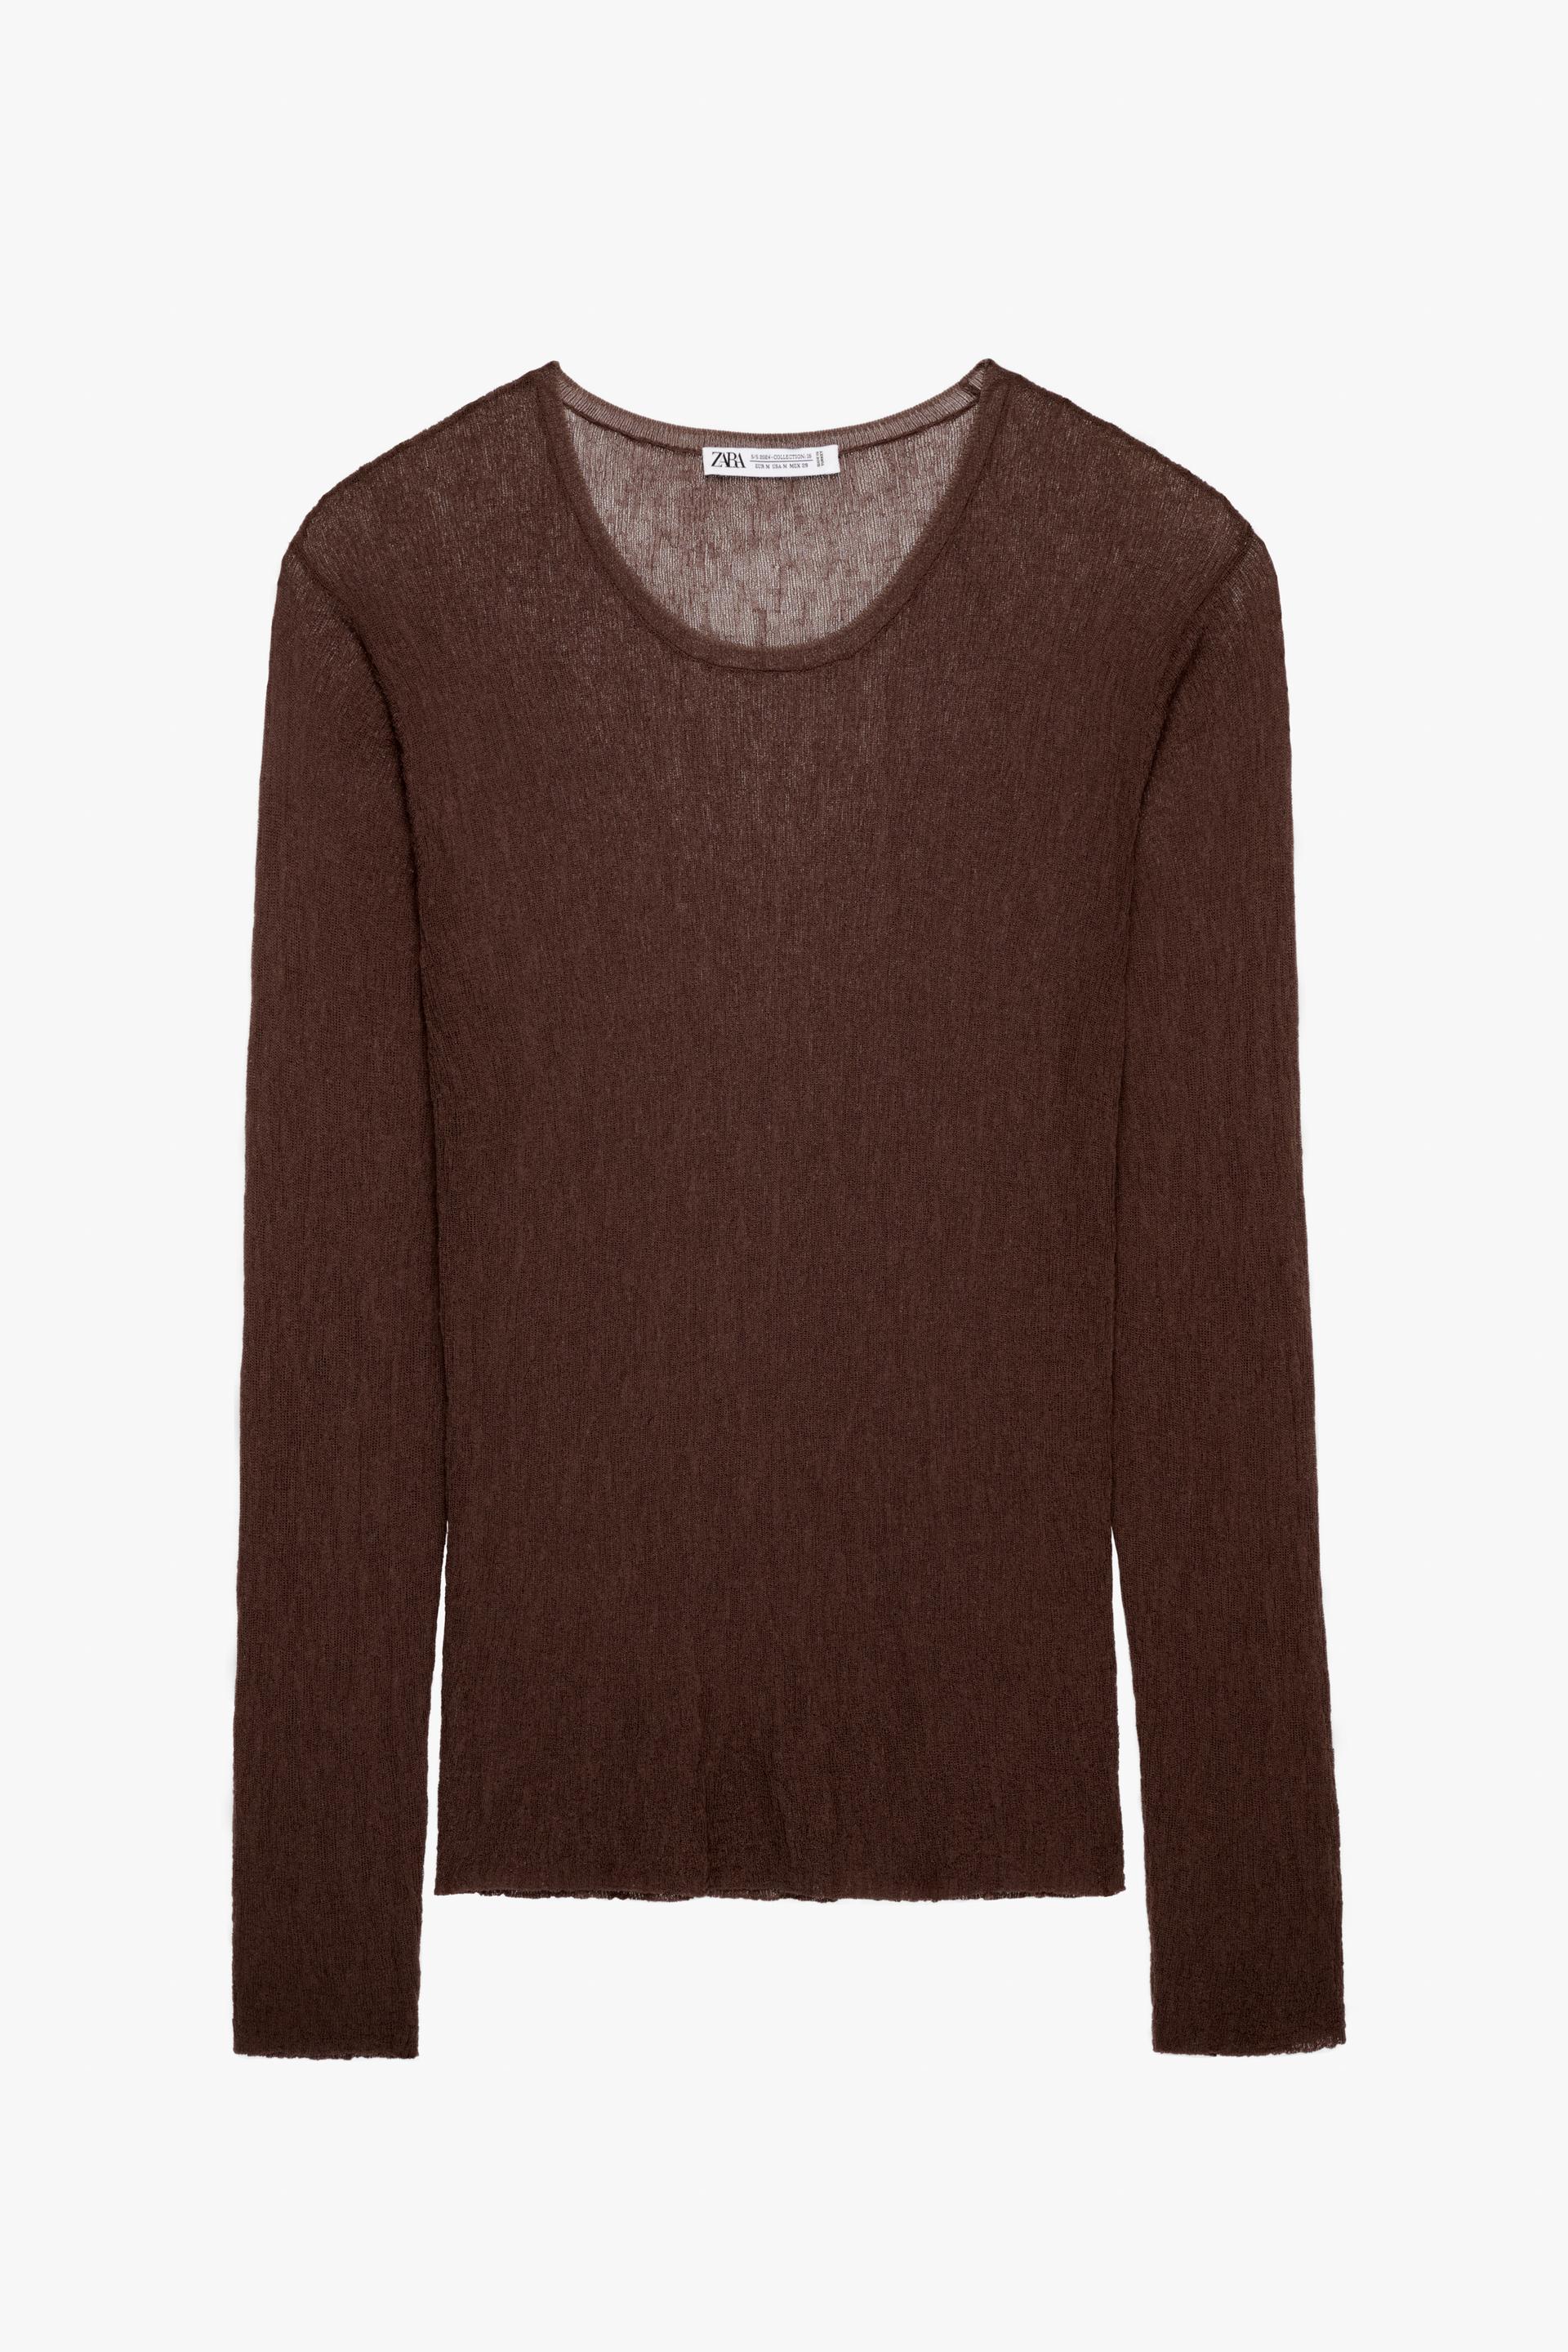 Свитер Zara Textured Limited Edition, коричневый свитер textured zara морской синий